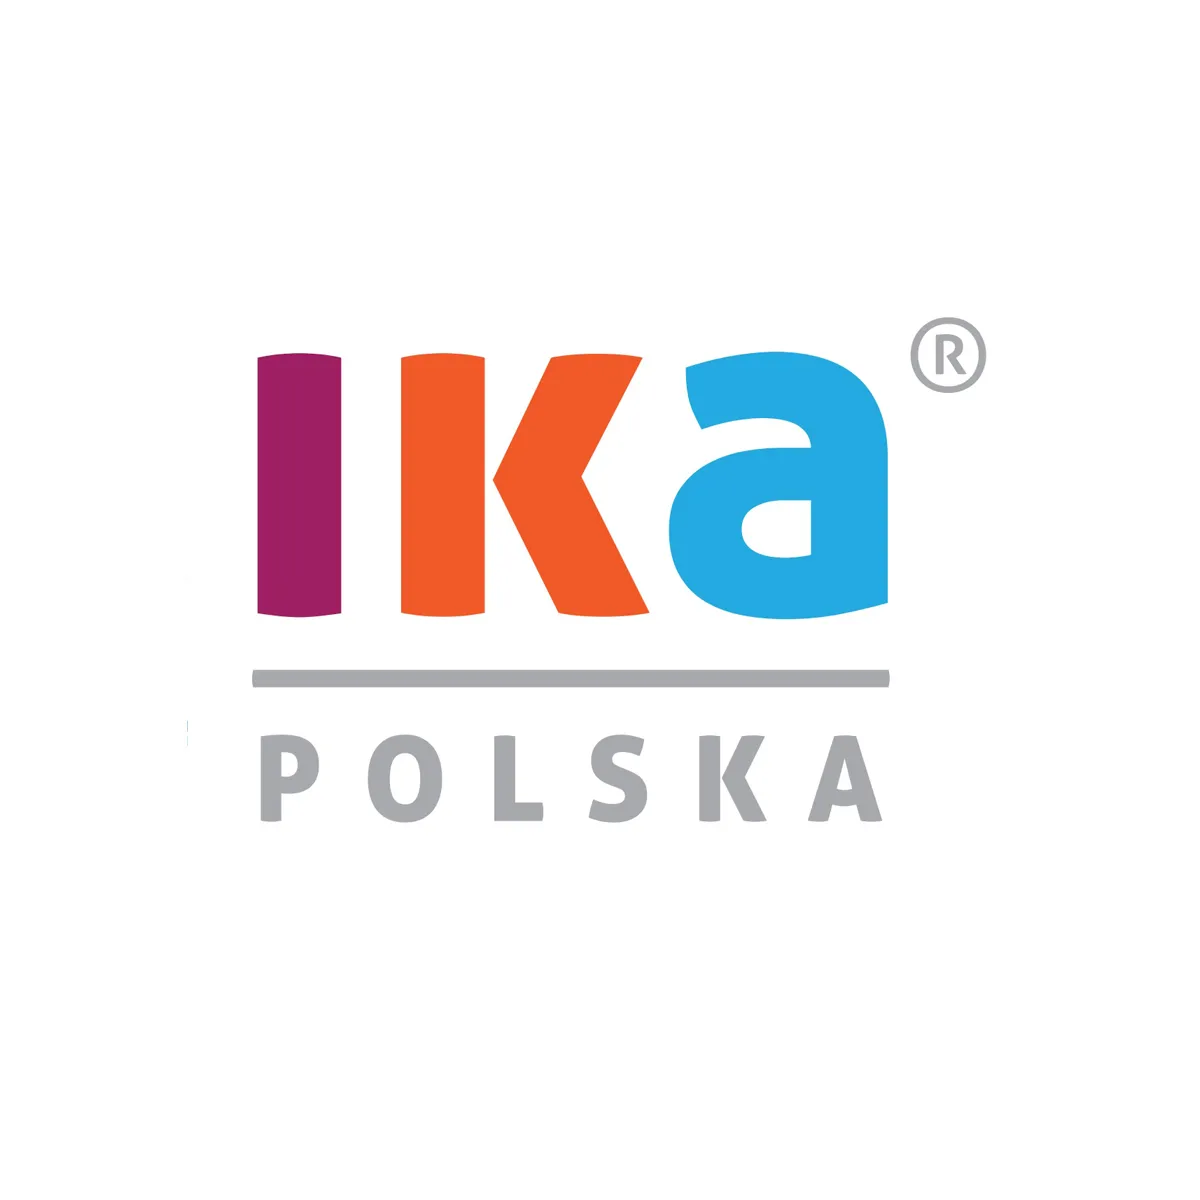 Prime will design&build new distribution center for IKA in Poznań